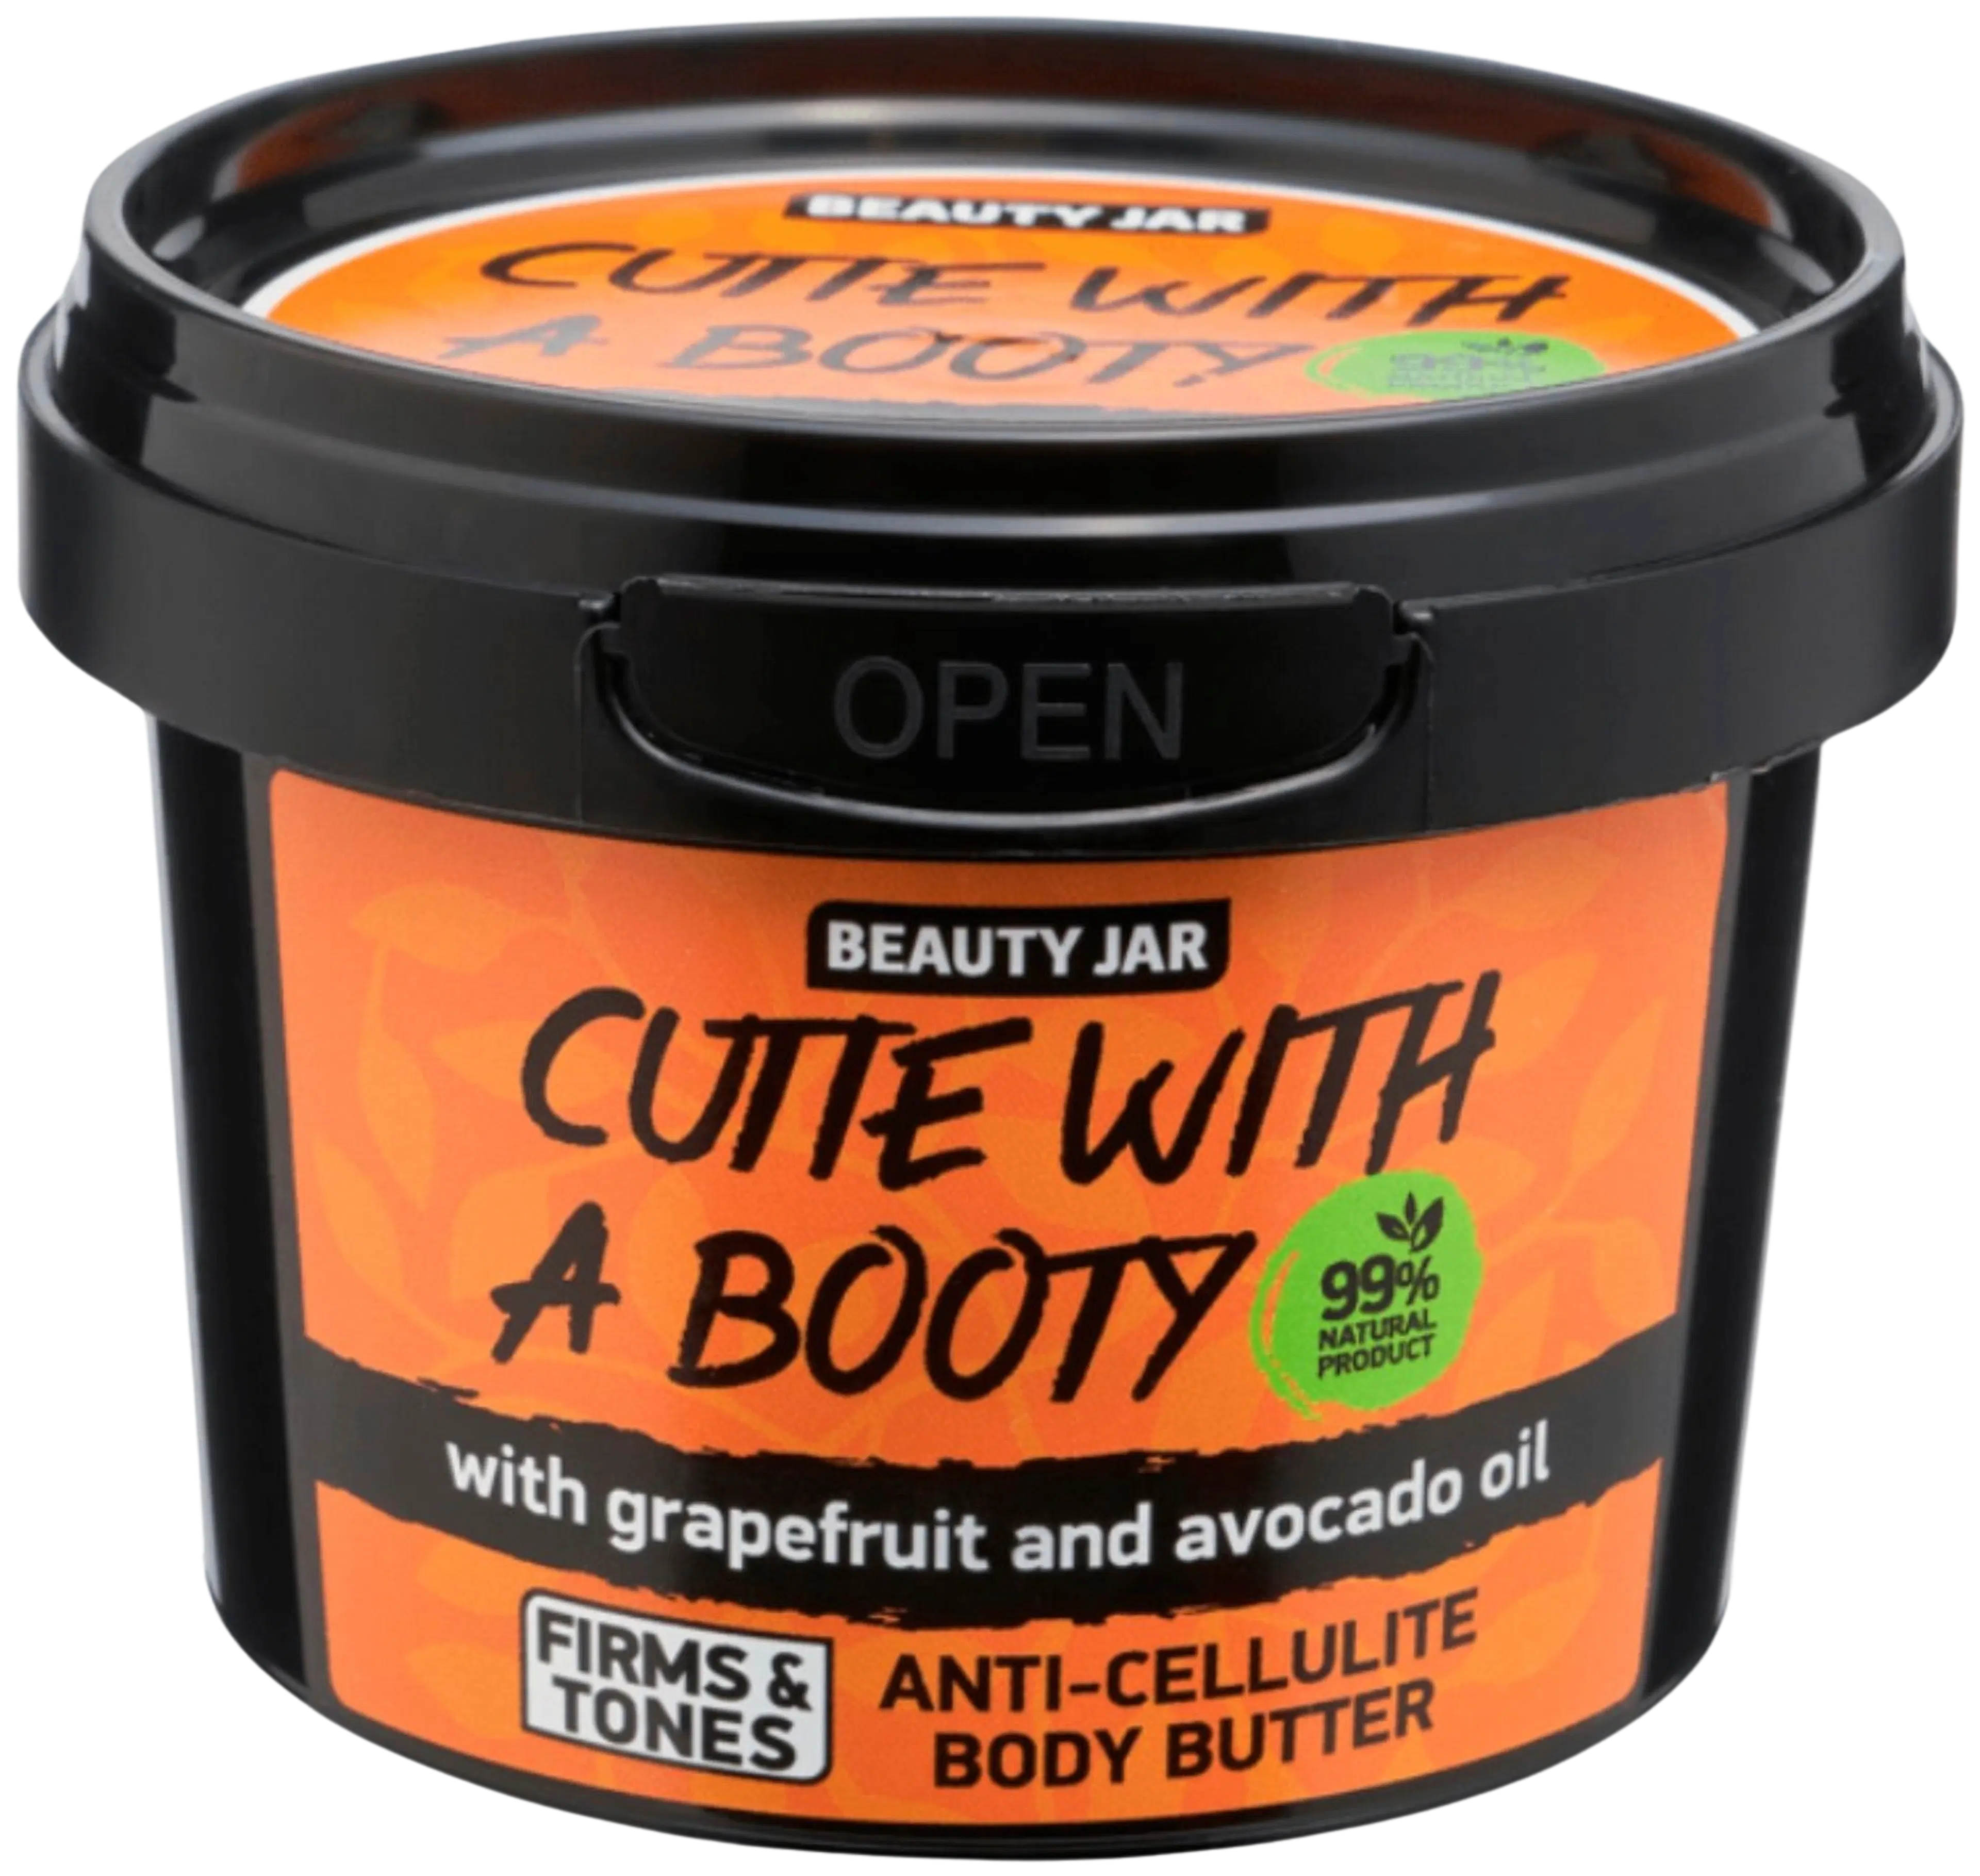 Beauty Jar Cutie With A Booty Body Butter vartalovoi 90 g